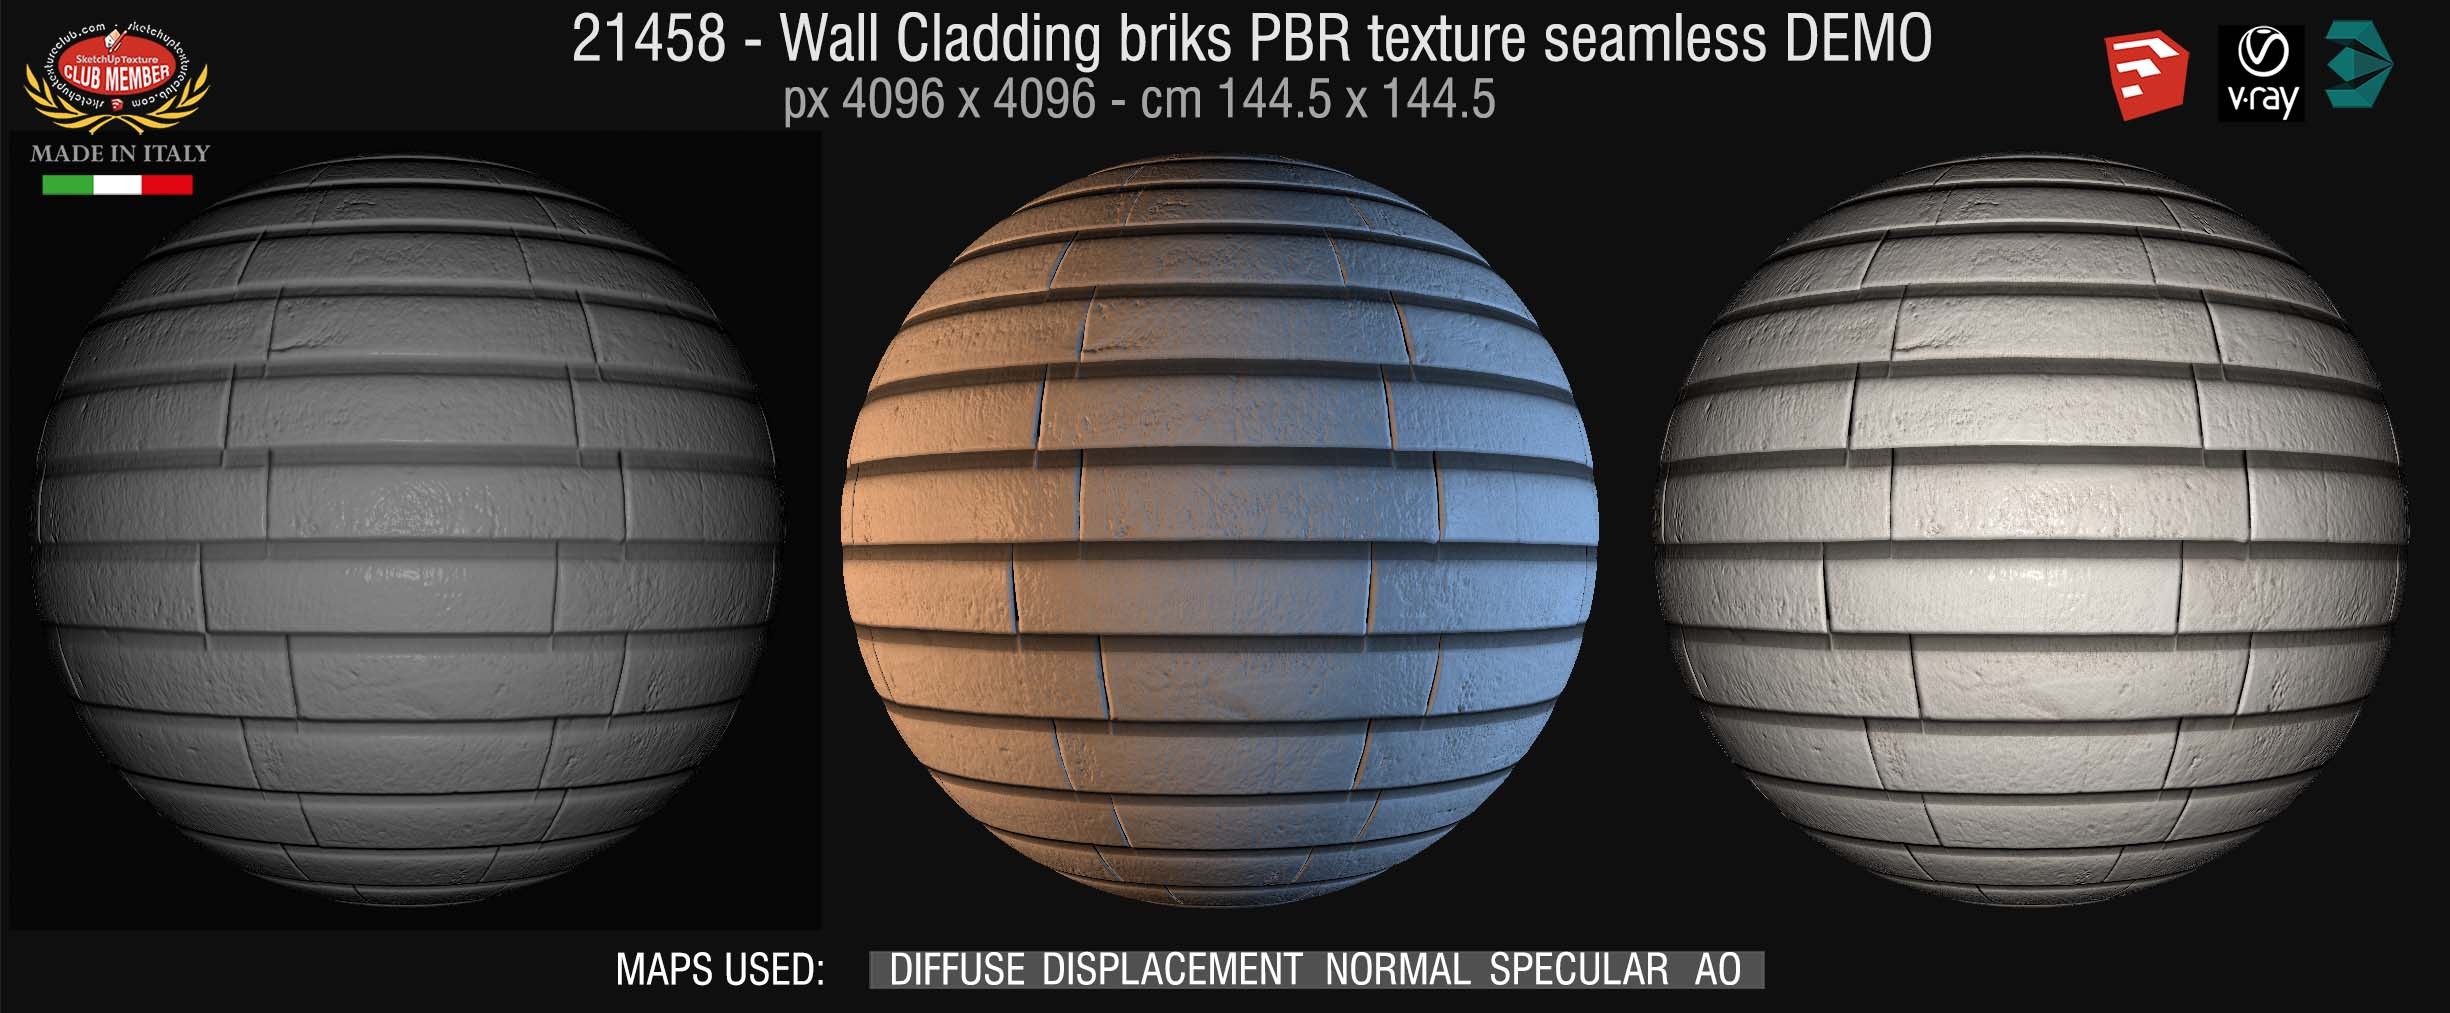 21458 Wall cladding bricks PBR texture seamless DEMO